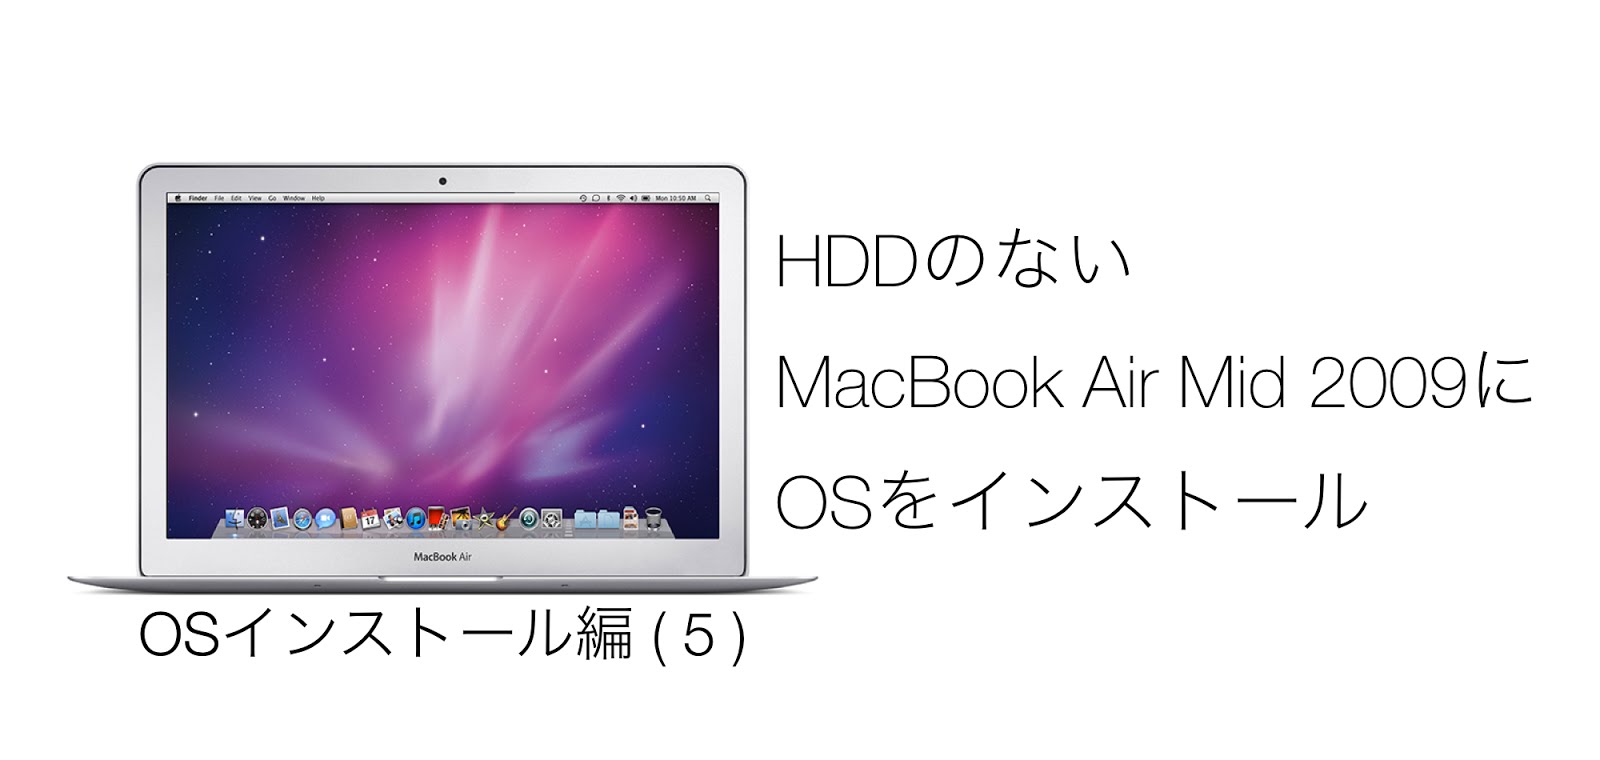 MacBook Air A1456 ジャンク SSDなし 充電器なし キーボード